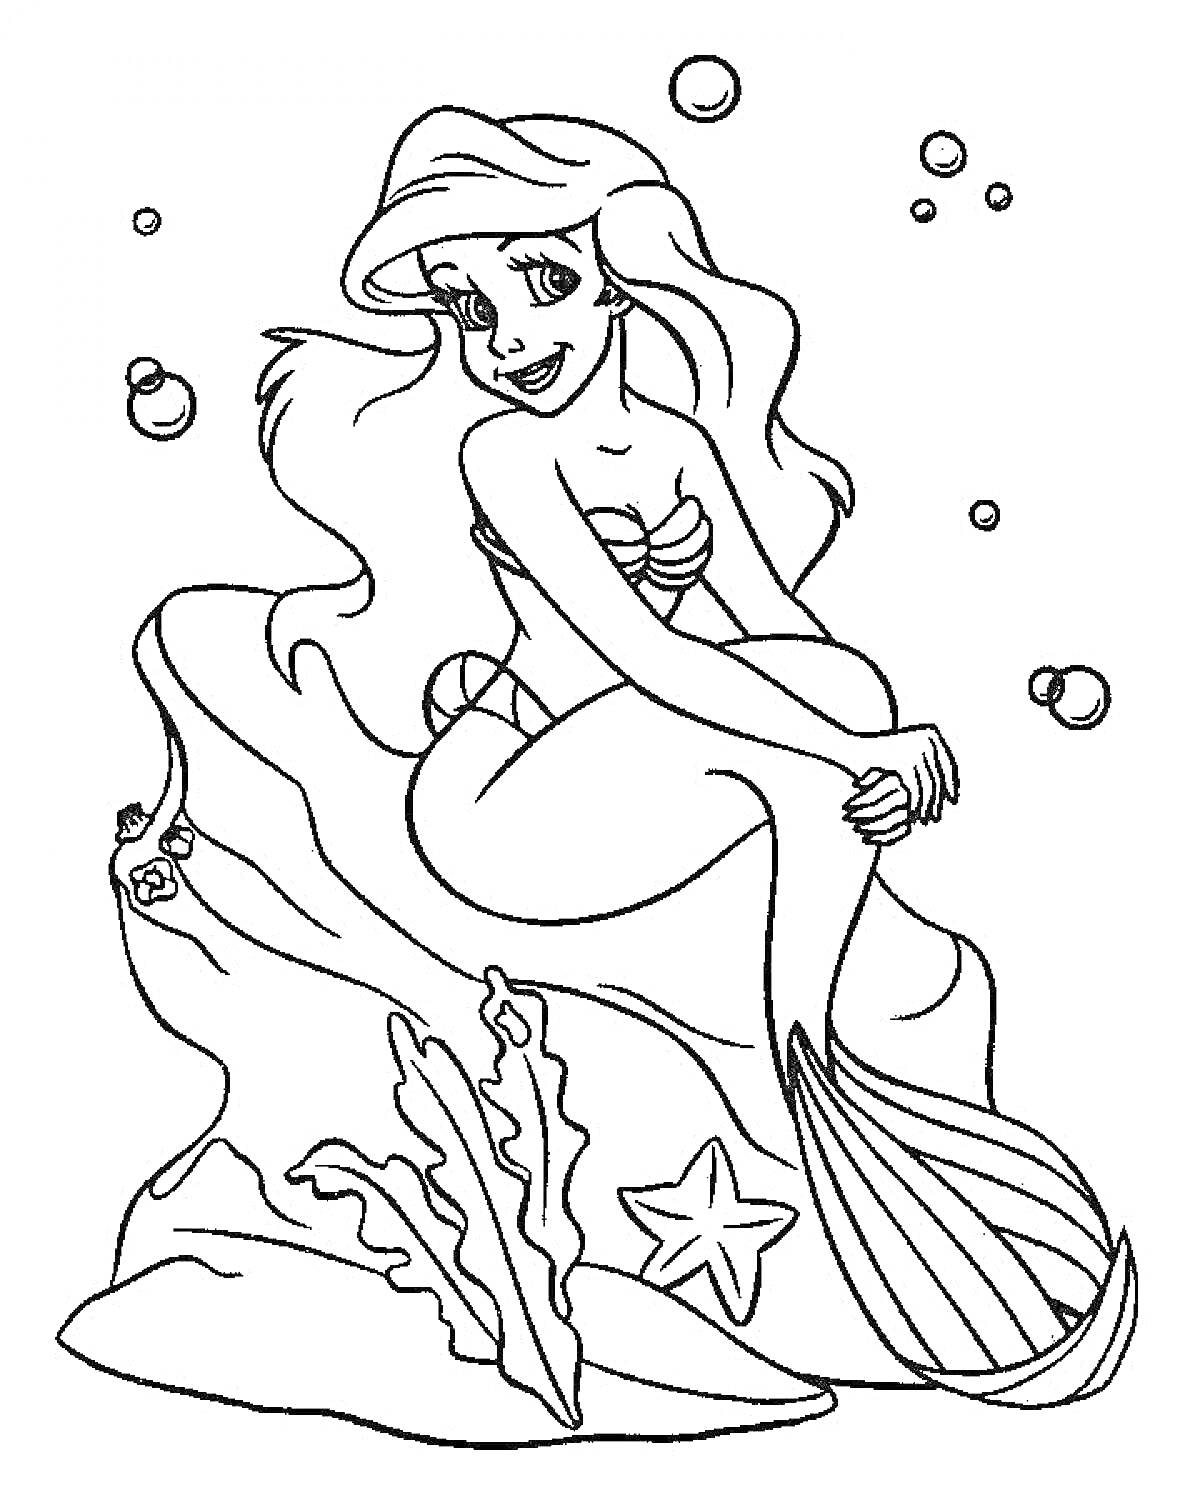 Раскраска Ариэль на рифе с морскими звездами и водорослями